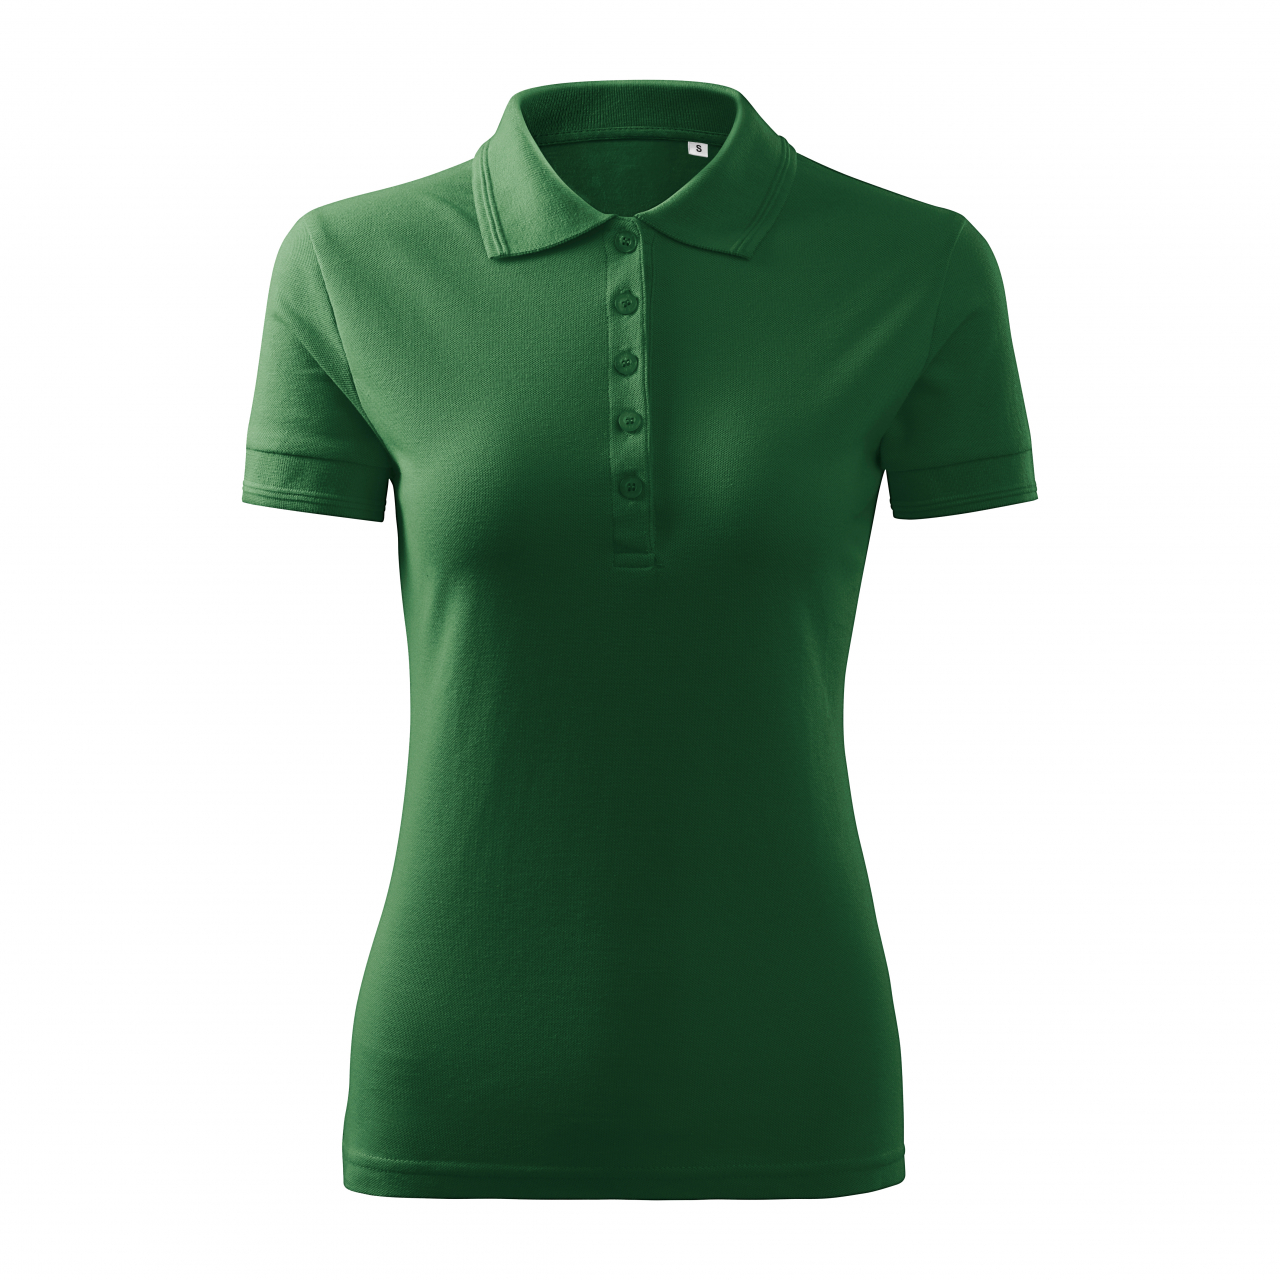 Polokošile dámská Malfini Pique Polo Free - tmavě zelená, XL